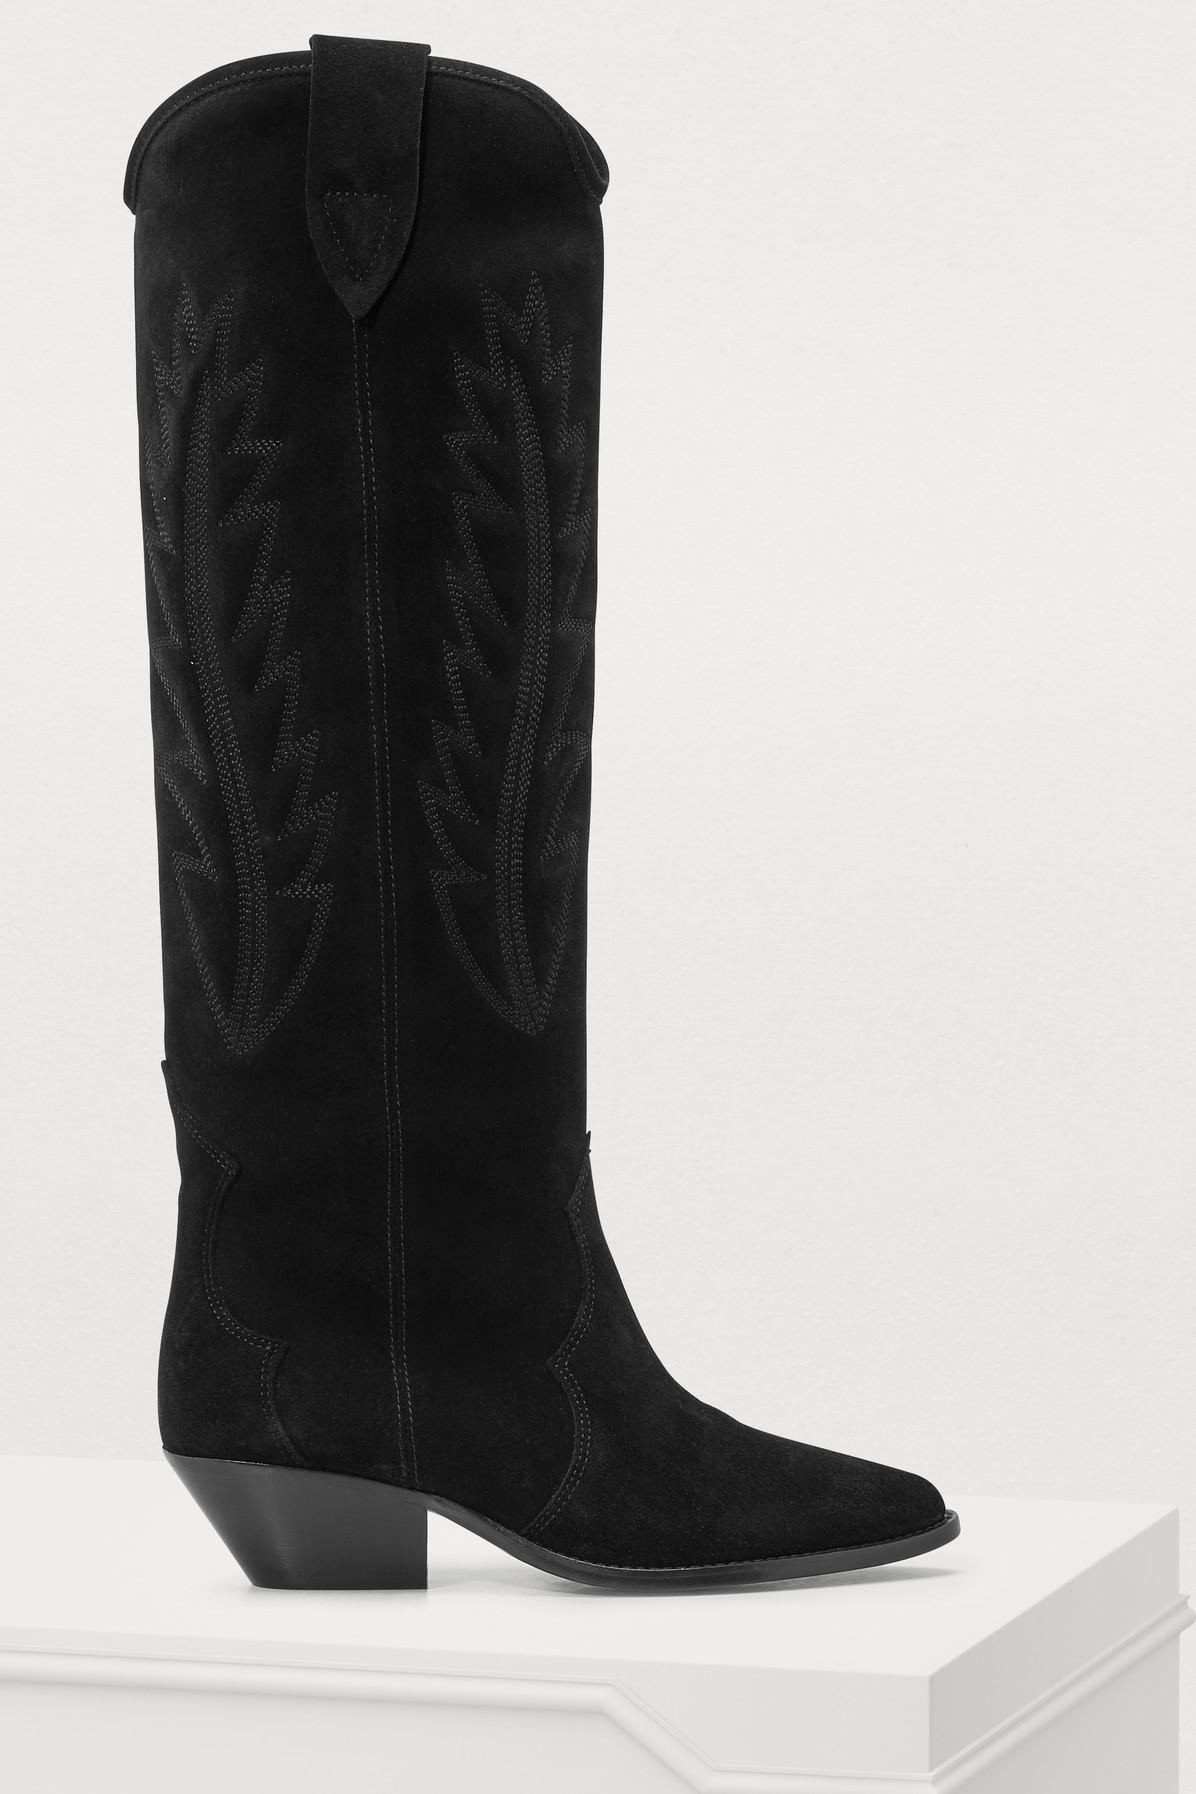 Isabel Marant Denim Denzy Cowboy Boots in Black - Lyst